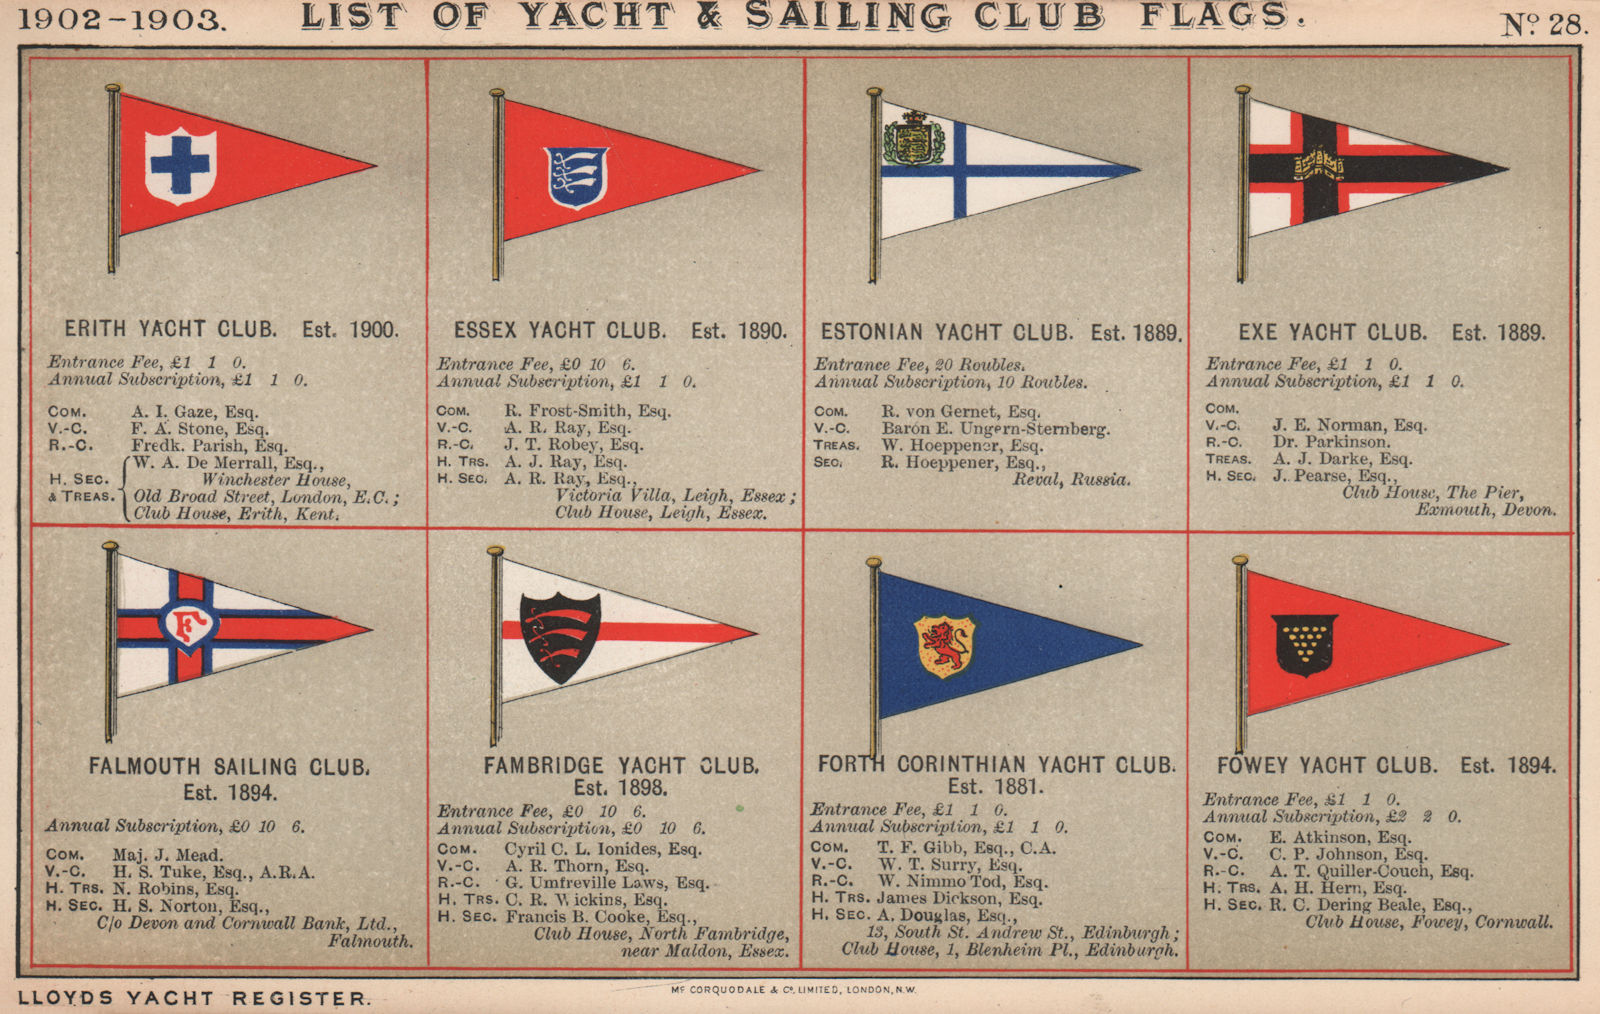 YACHT & SAILING CLUB FLAGS E-F. Erith - Estonian - Exe - Falmouth - Fowey   1902